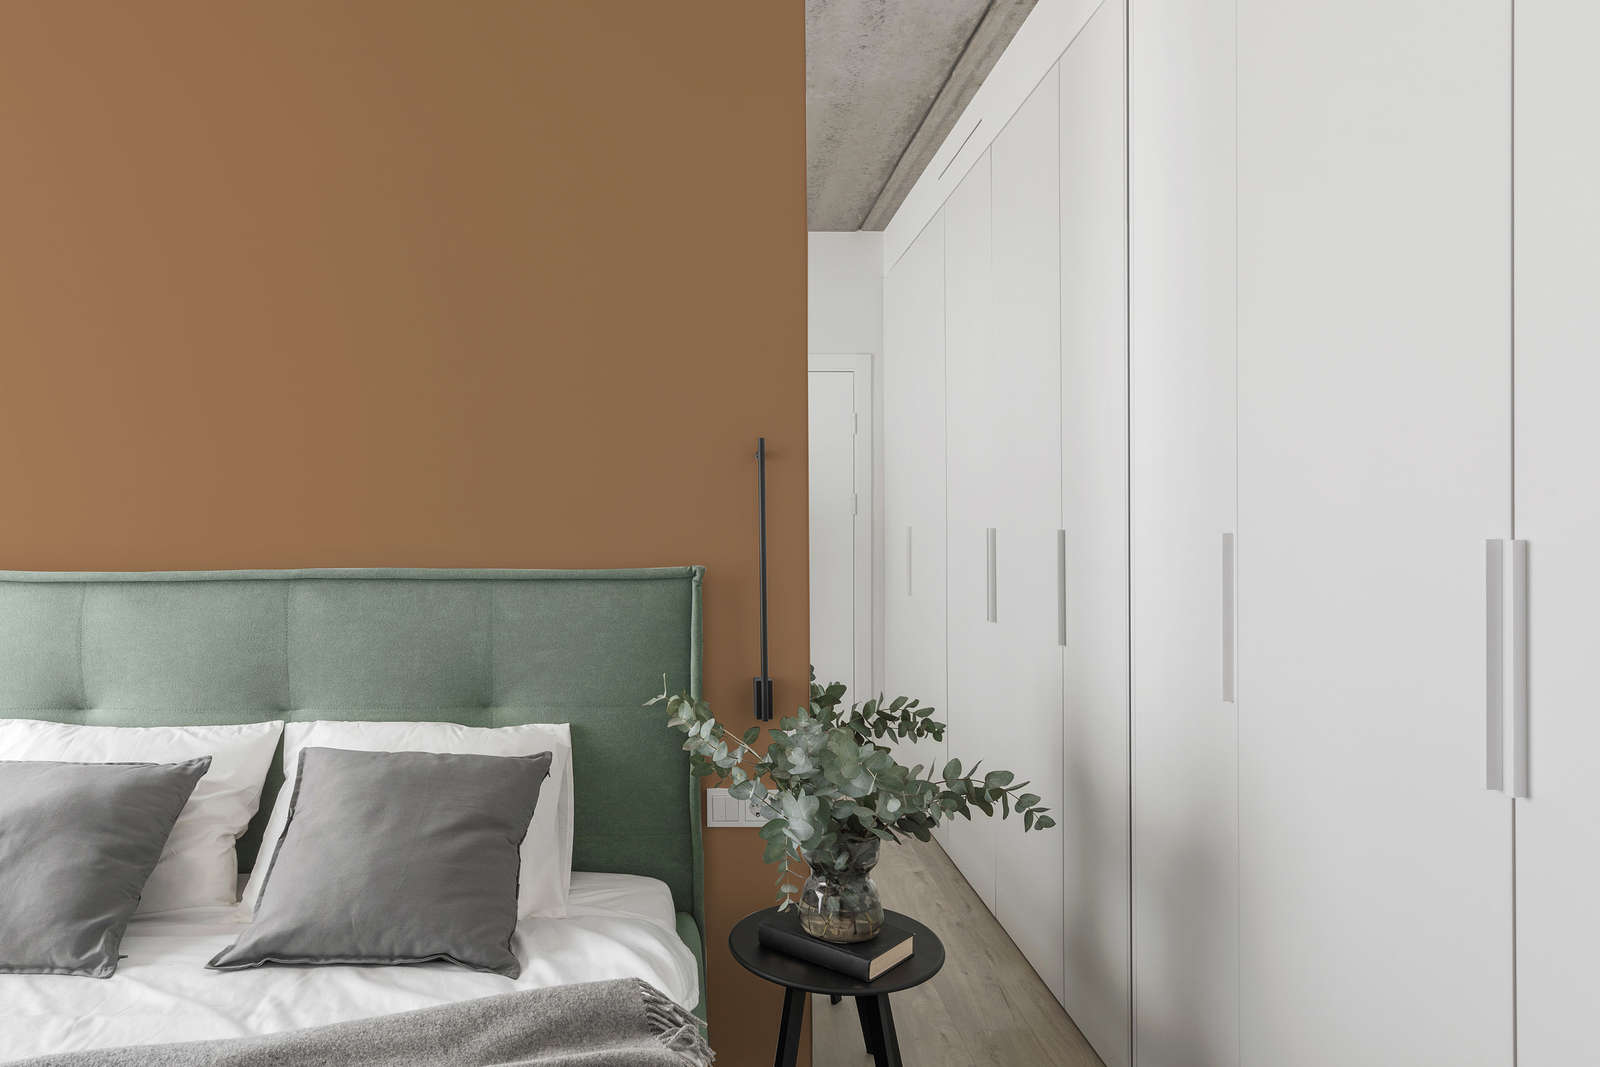             Premium Wall Paint Sensitive Golden Brown »Boho Beige« NW728 – 2.5 litre
        